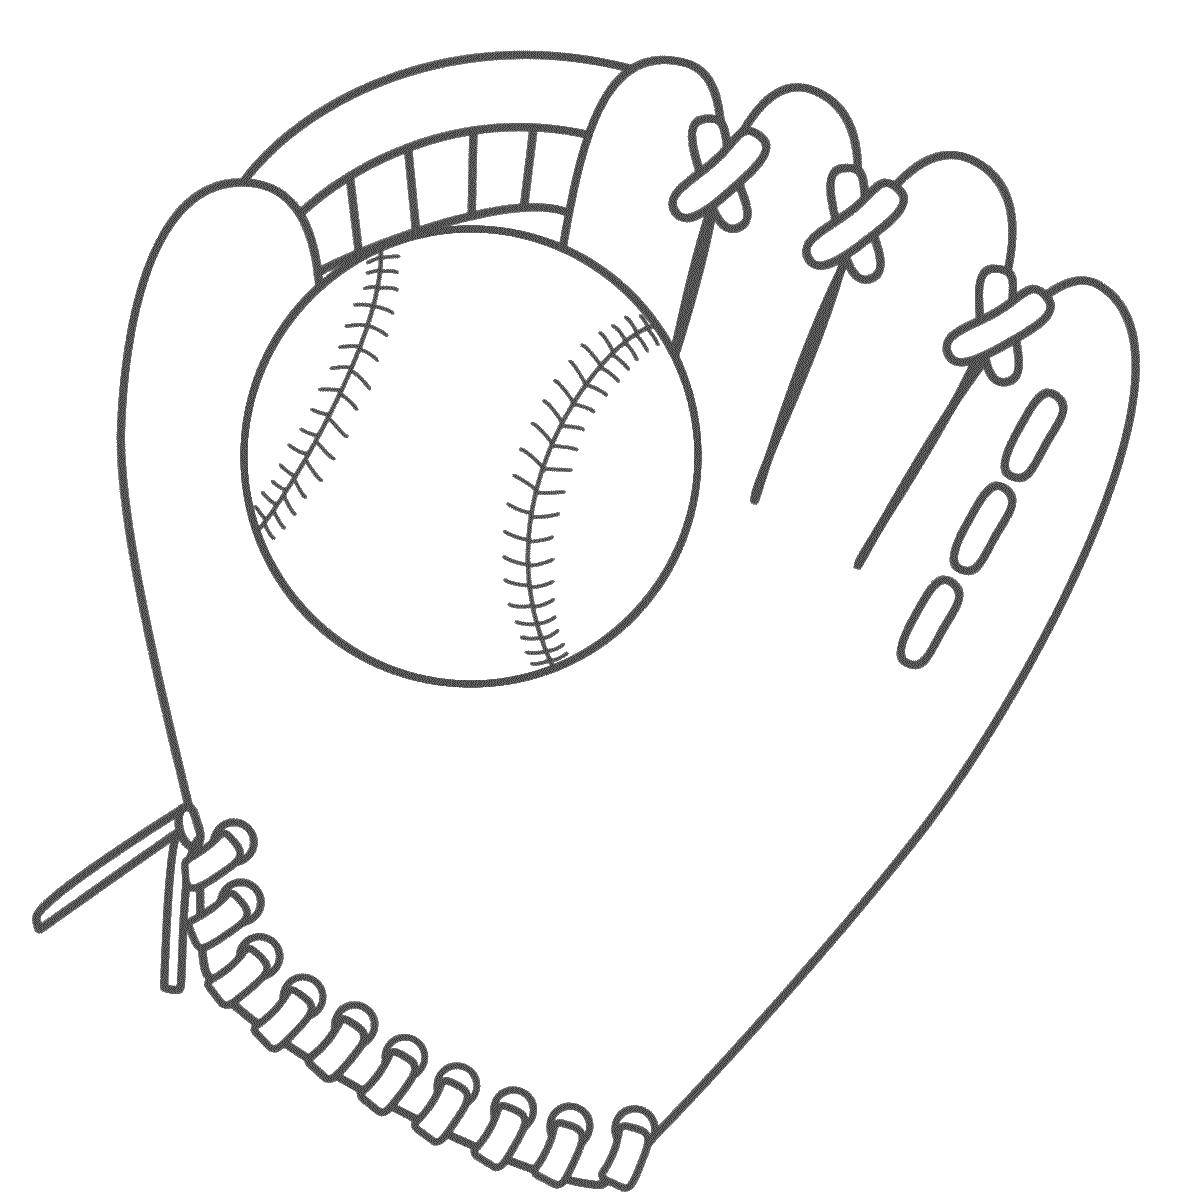 Coloring Baseball glove with ball. Category Sports. Tags:  baseball, baseball glove, .